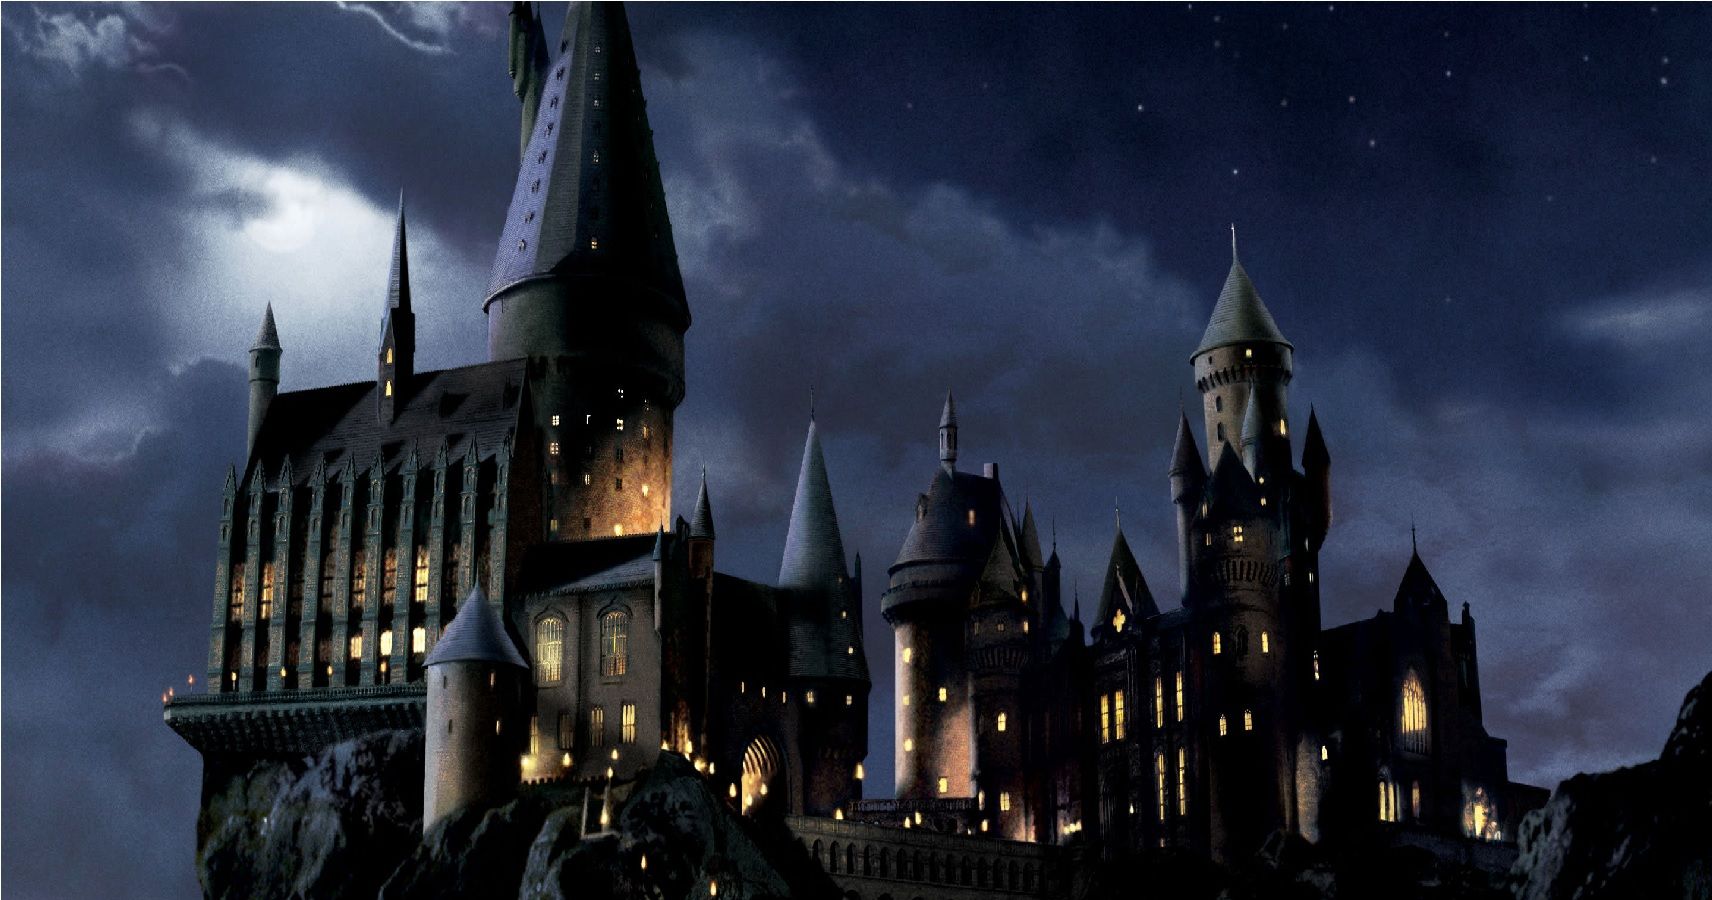 harry potter hogwarts legacy switch